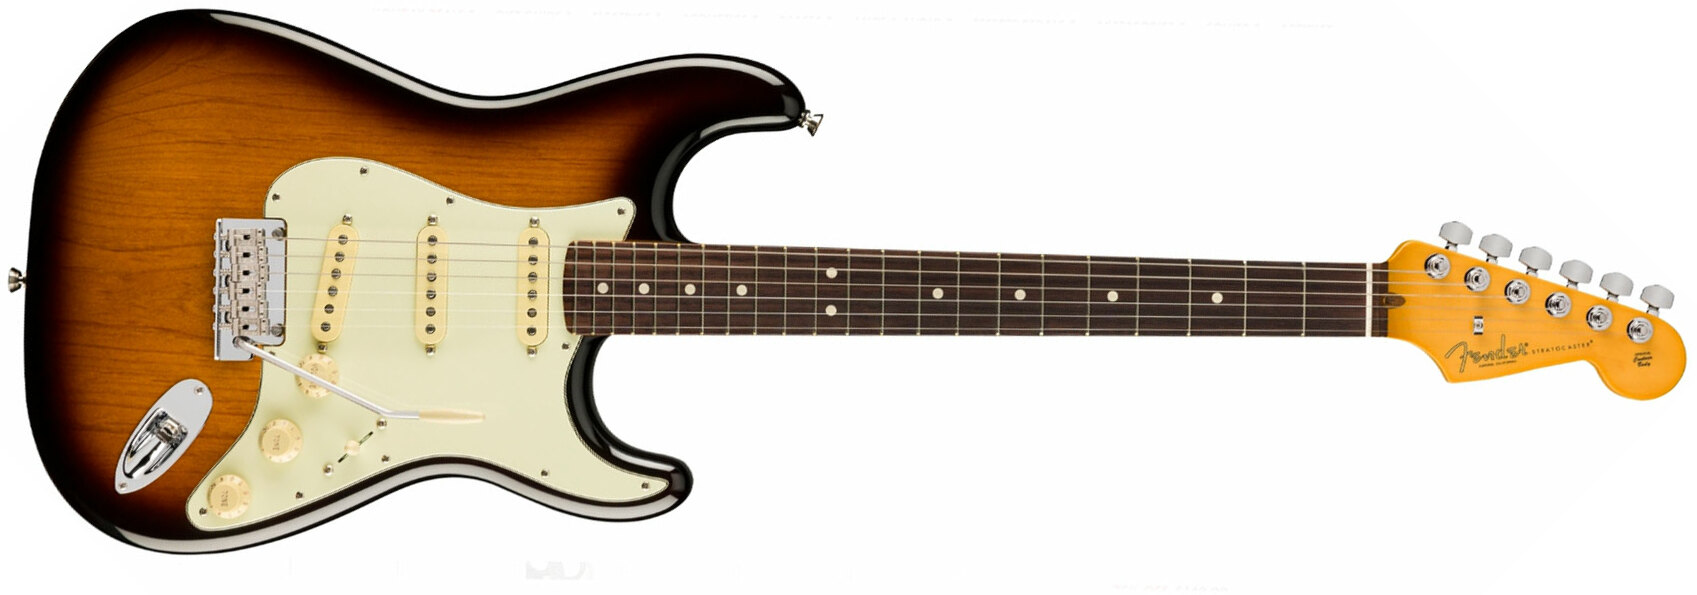 Fender Strat American Professional Ii 70th Anniversary Usa 3s Trem Rw - 2-color Sunburst - Guitare Électrique Forme Str - Main picture